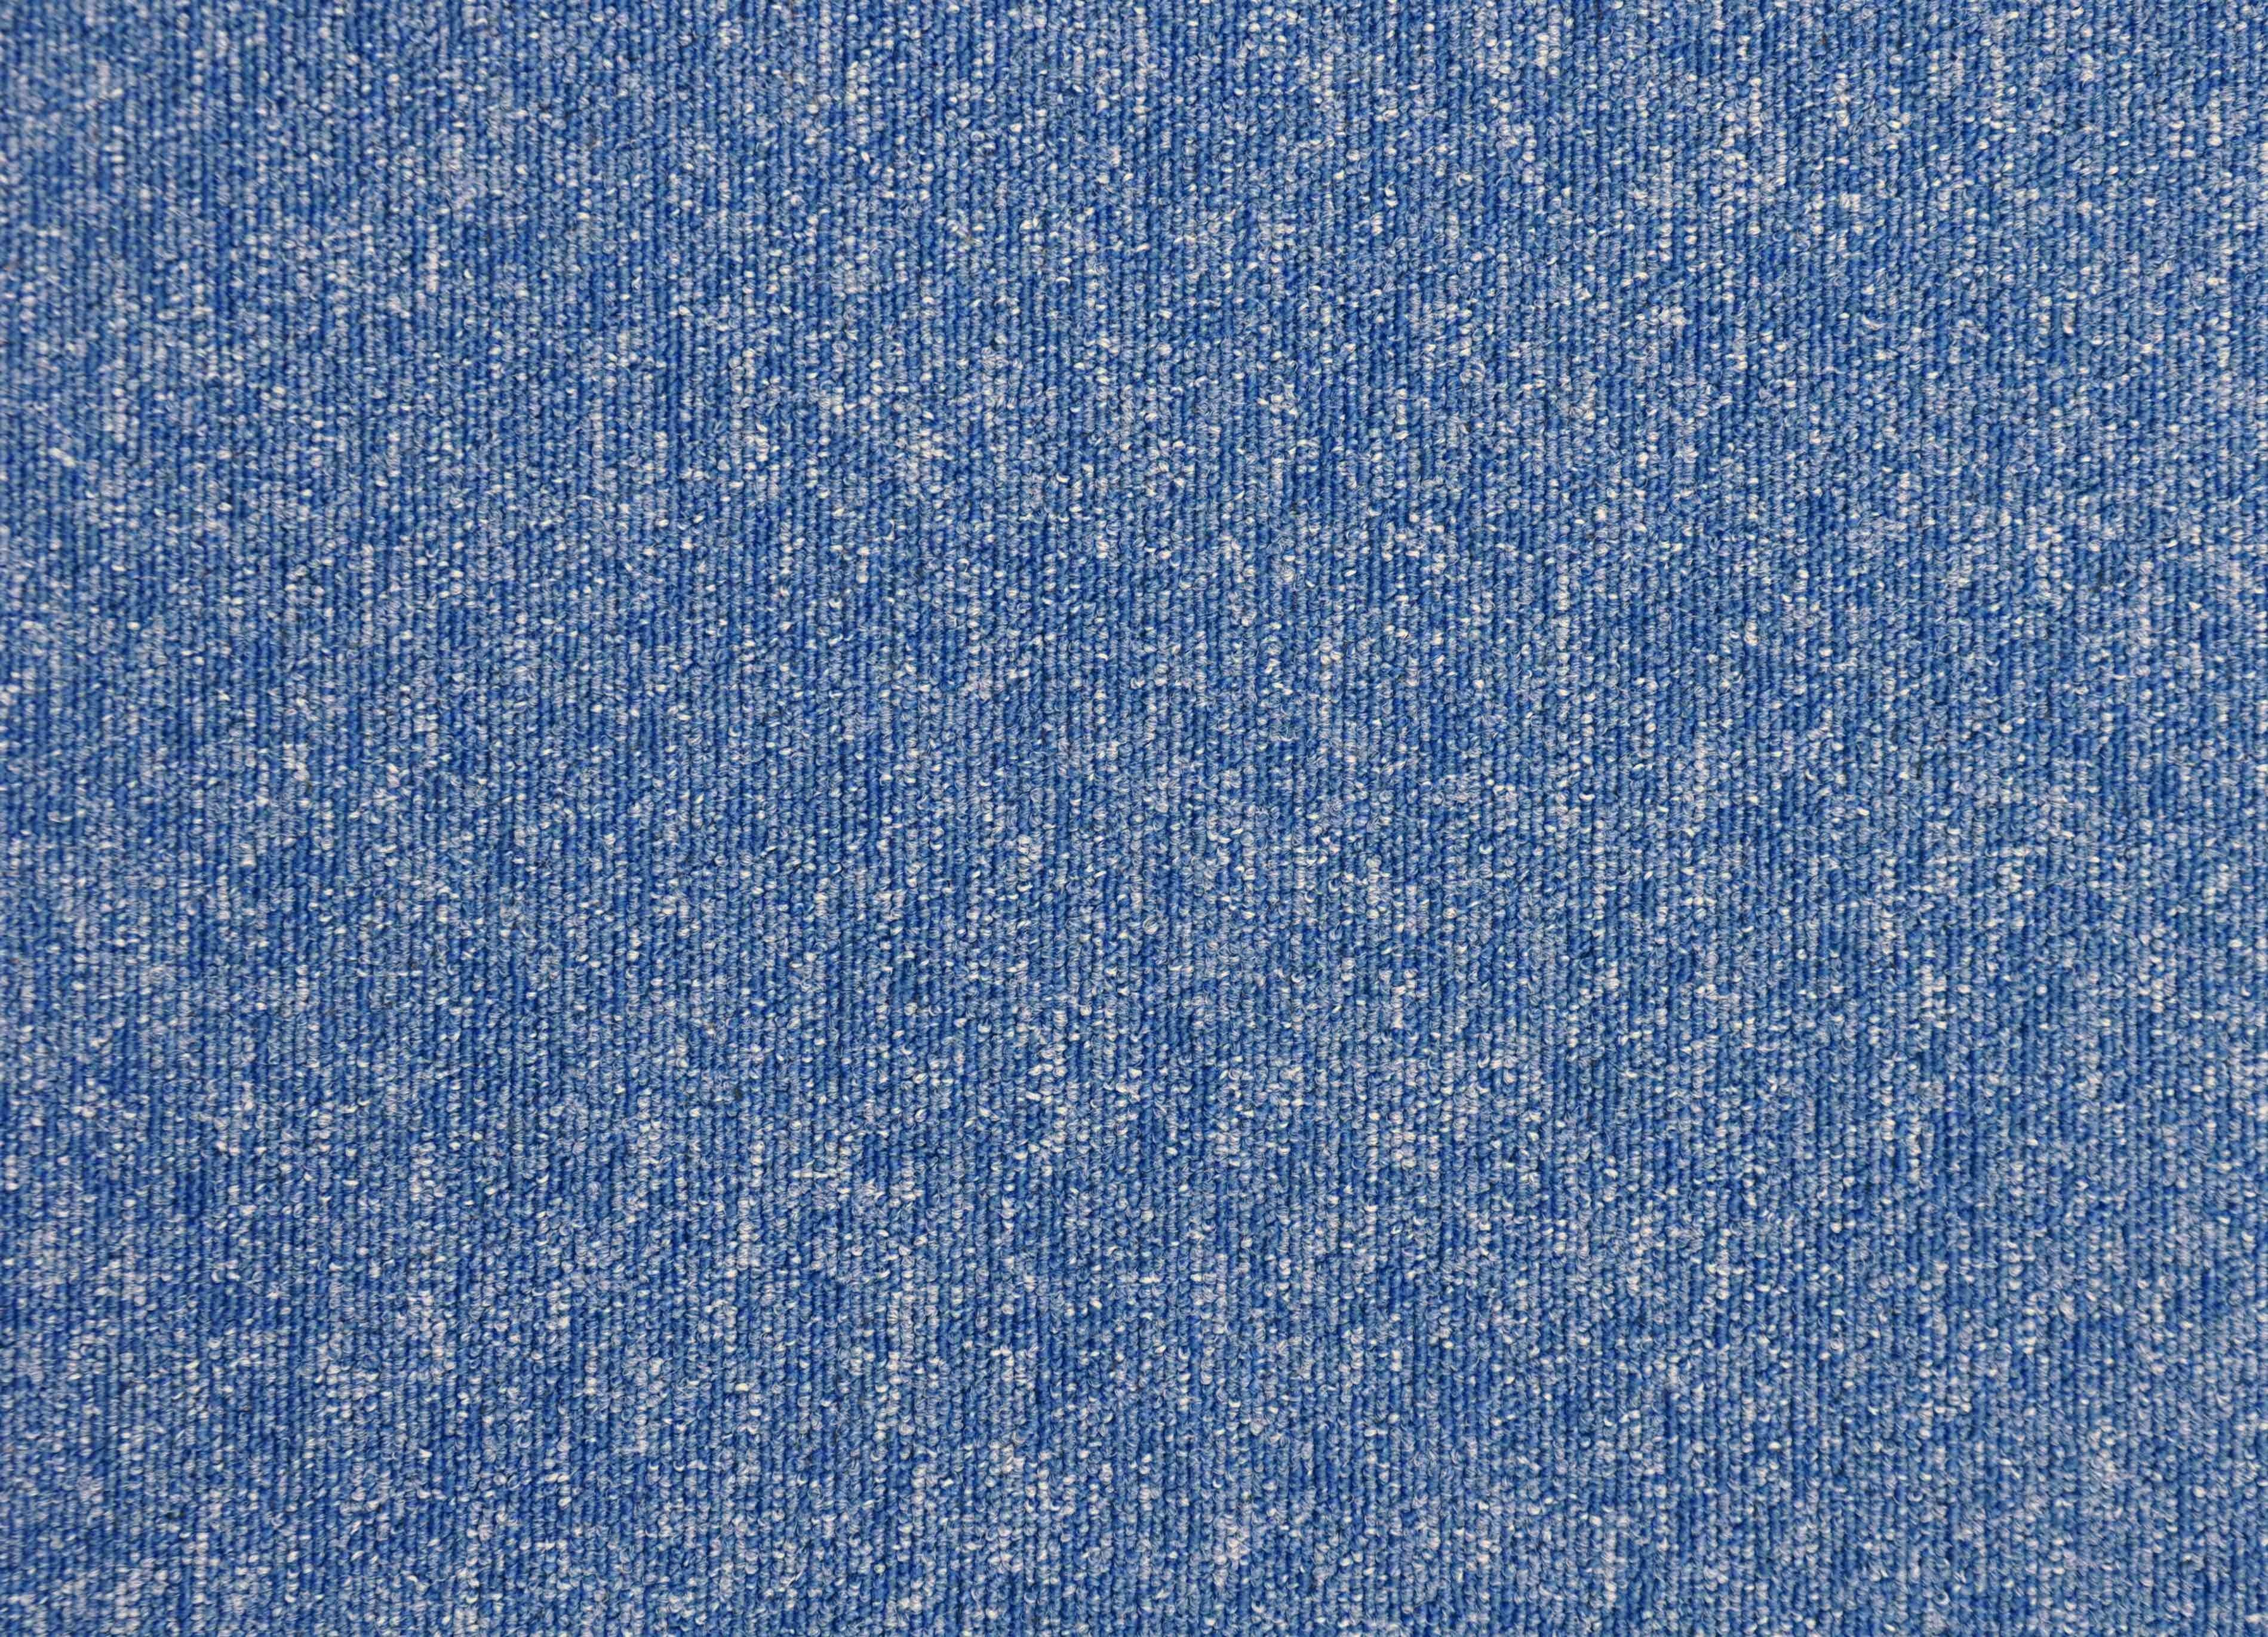 Paragon Vital Carpet Tile 6013